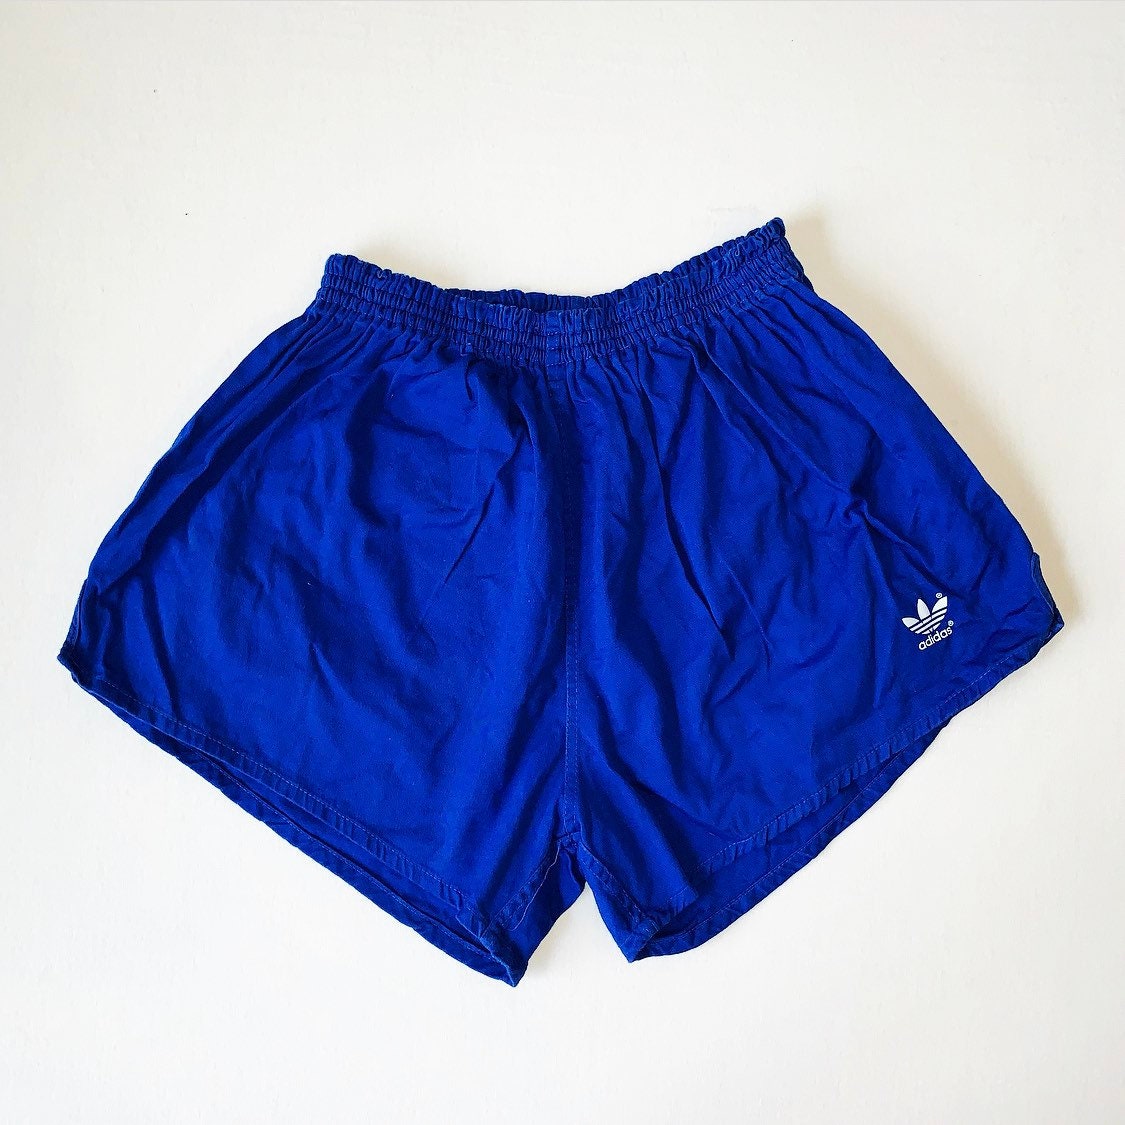 Vintage Adidas Beckenbauer Cotton Short Shorts Retro 80s 90s | Etsy